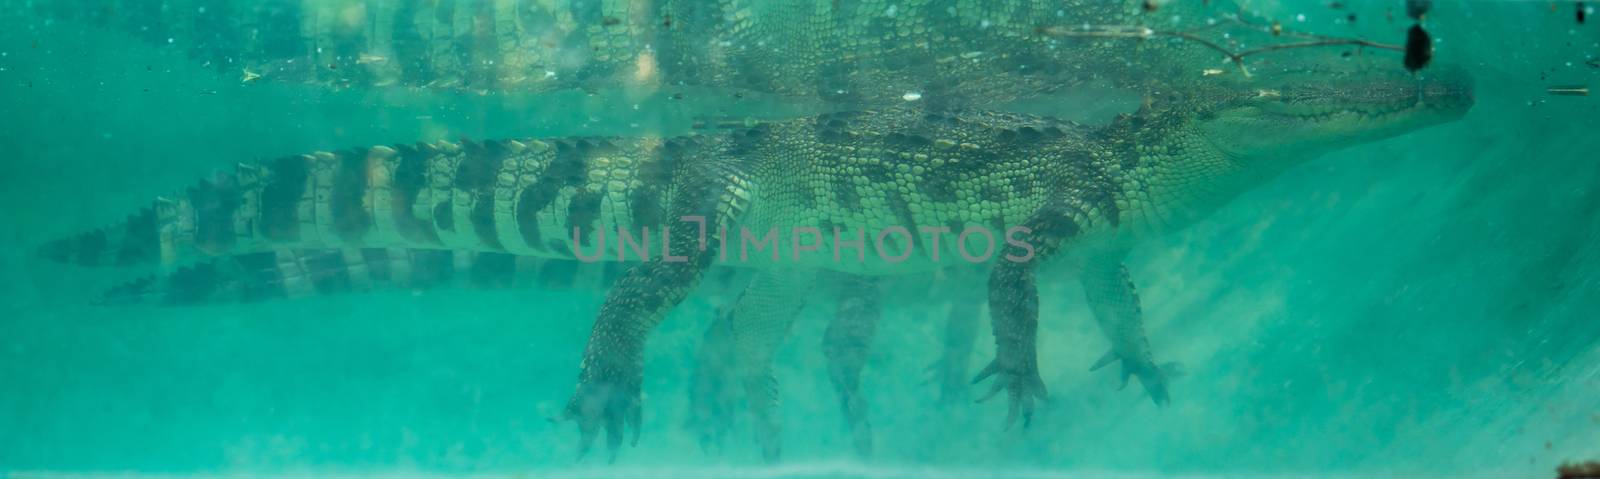 crocodile under water by anankkml